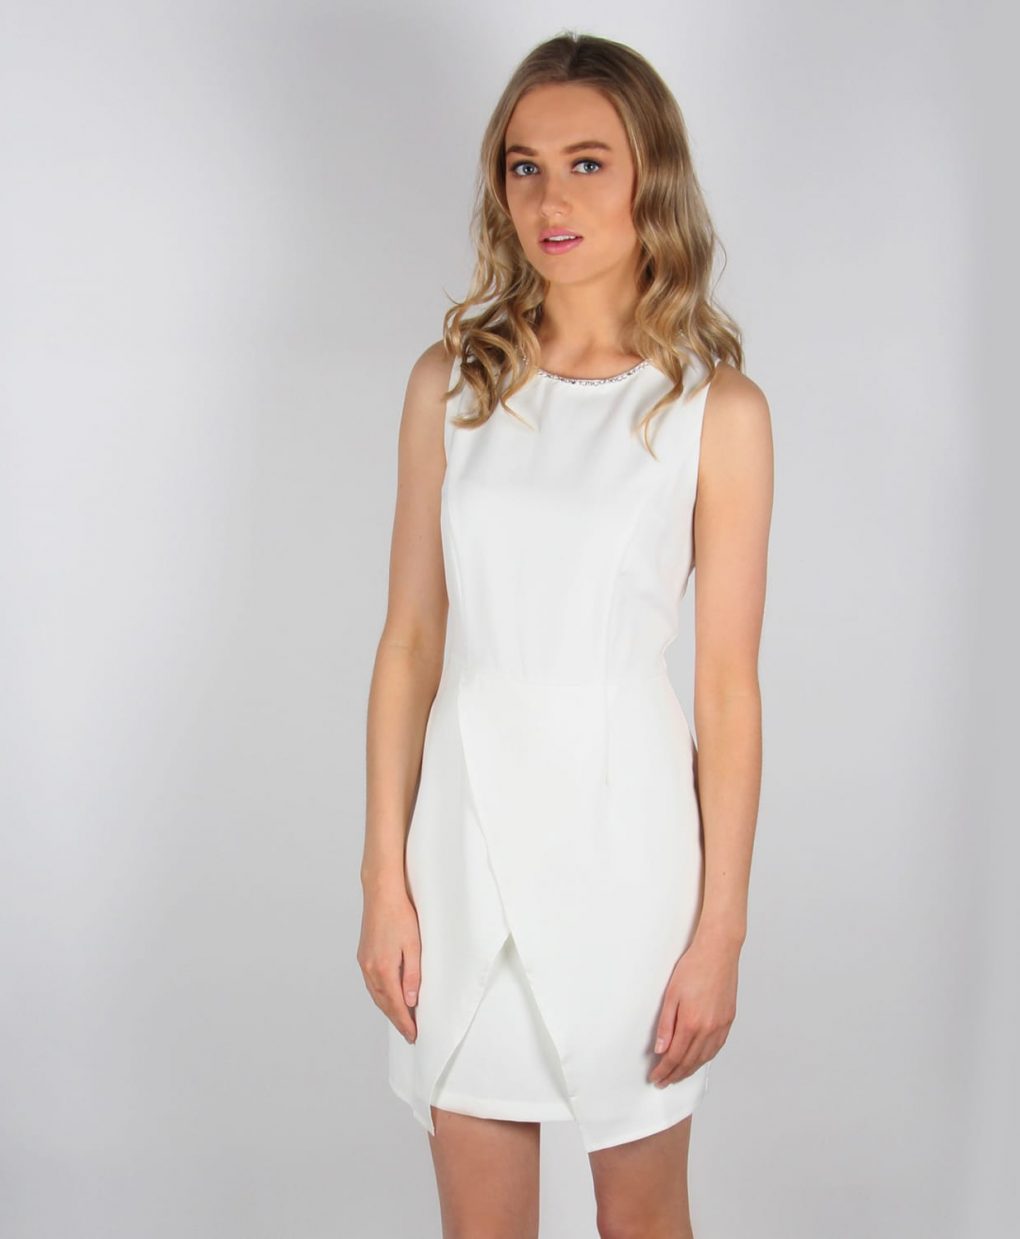 Alila white tailored wrap dress.